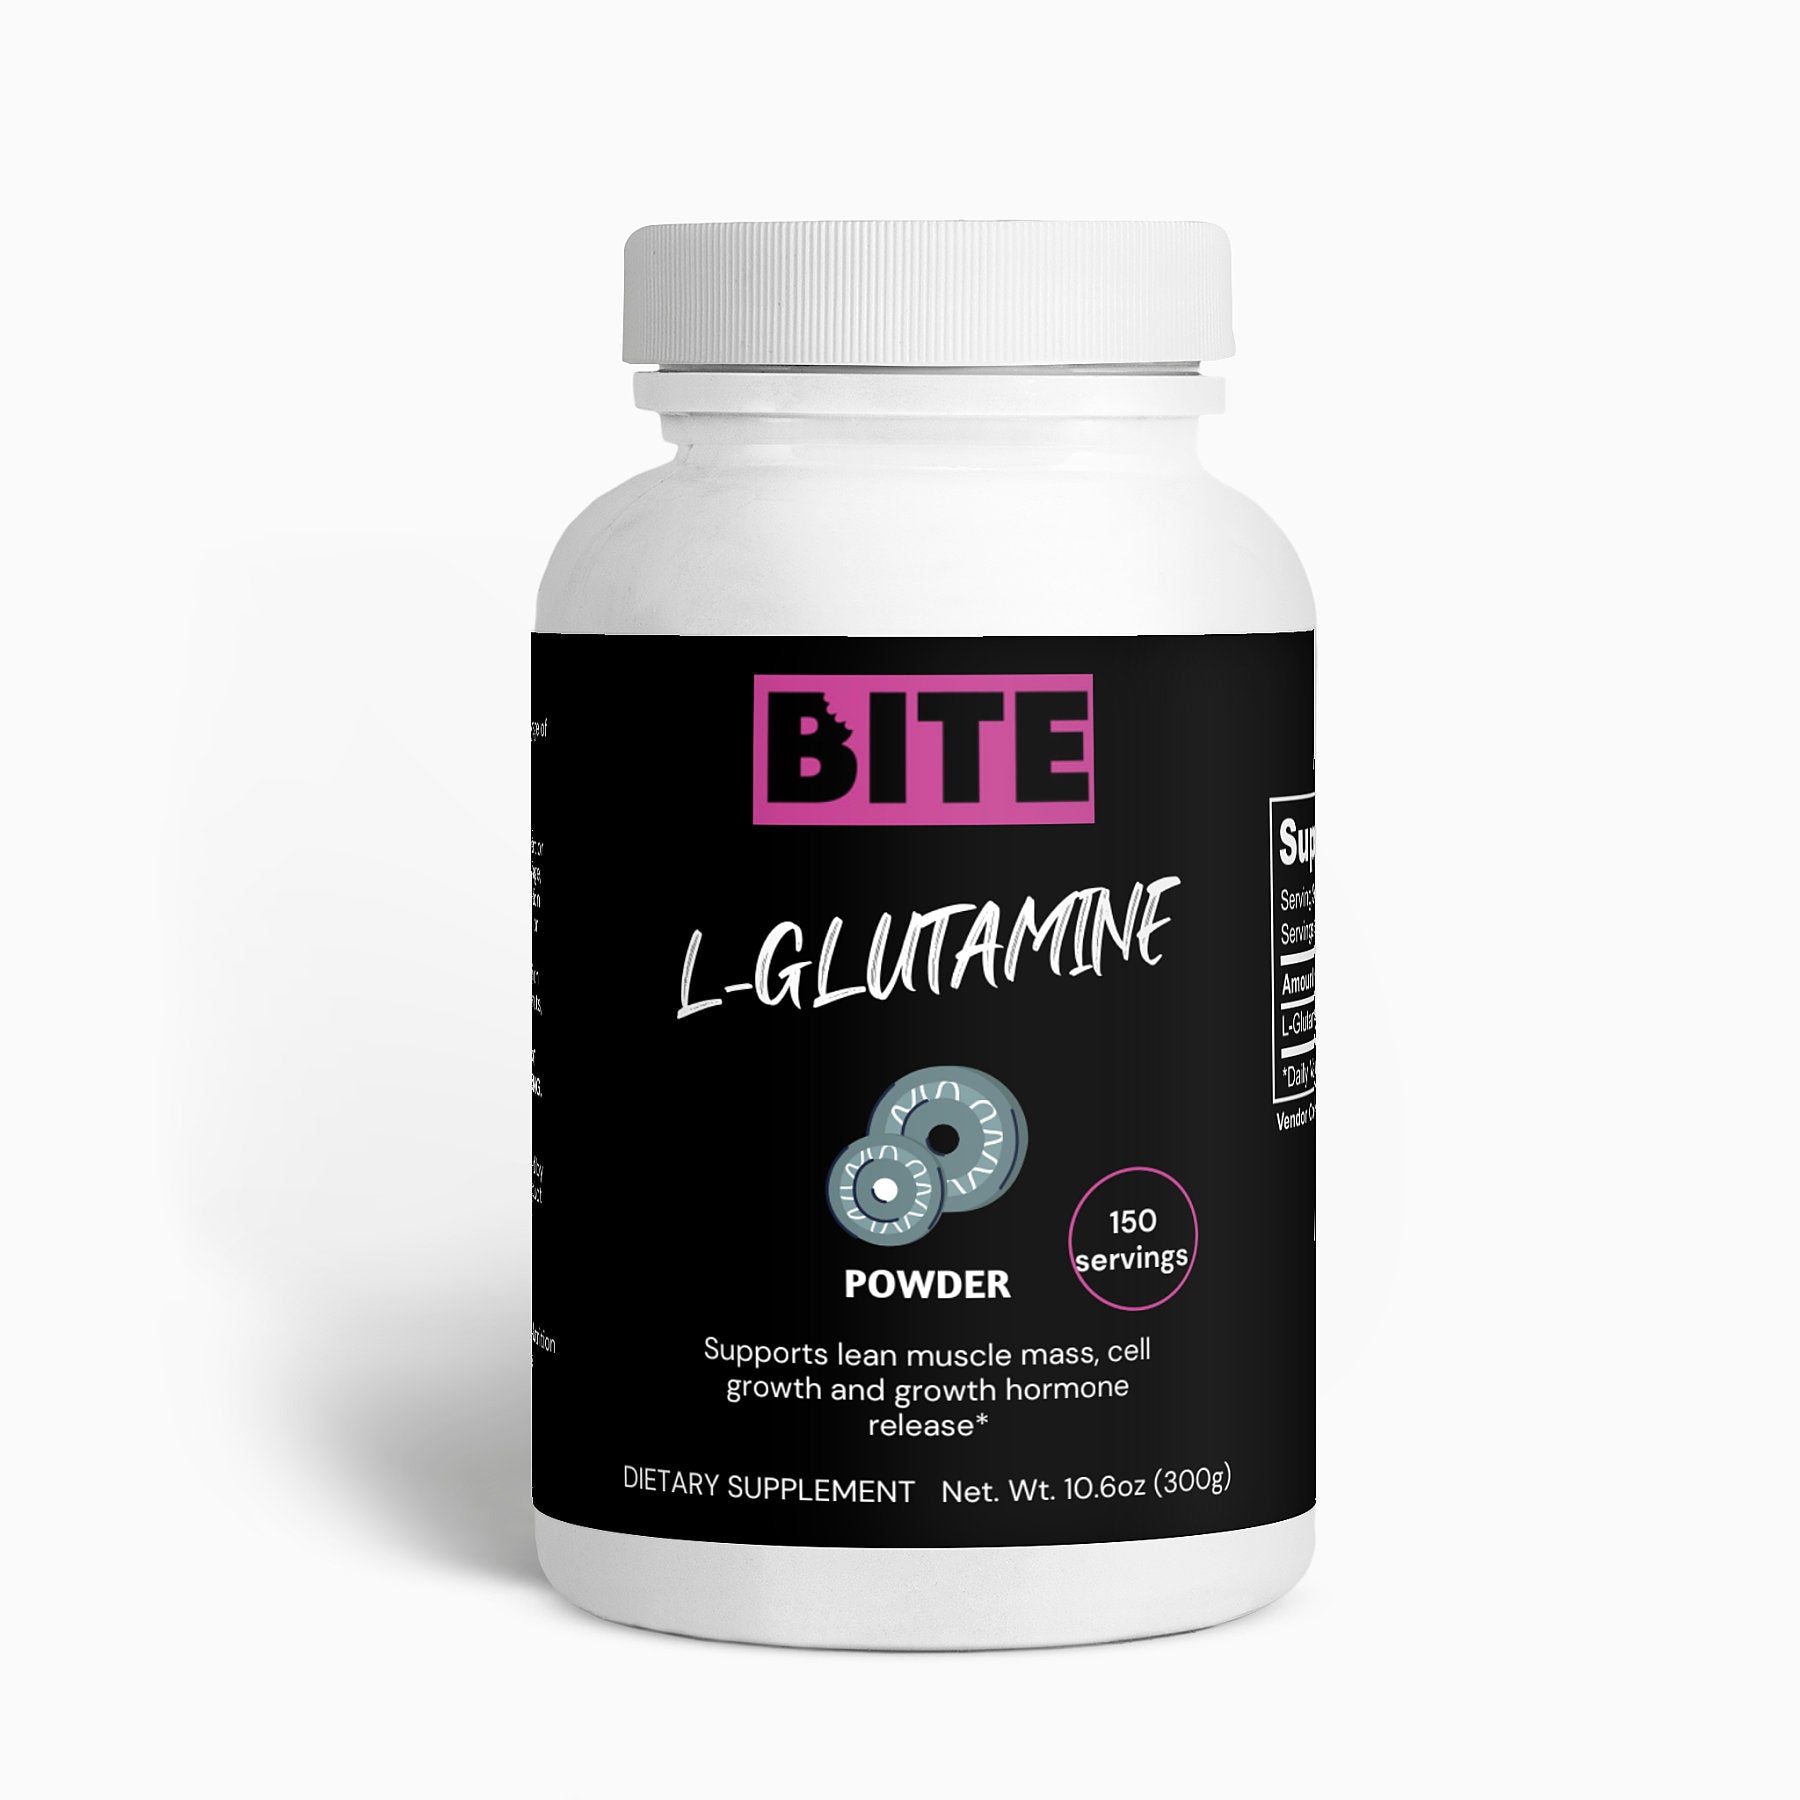 L-Glutamine powder